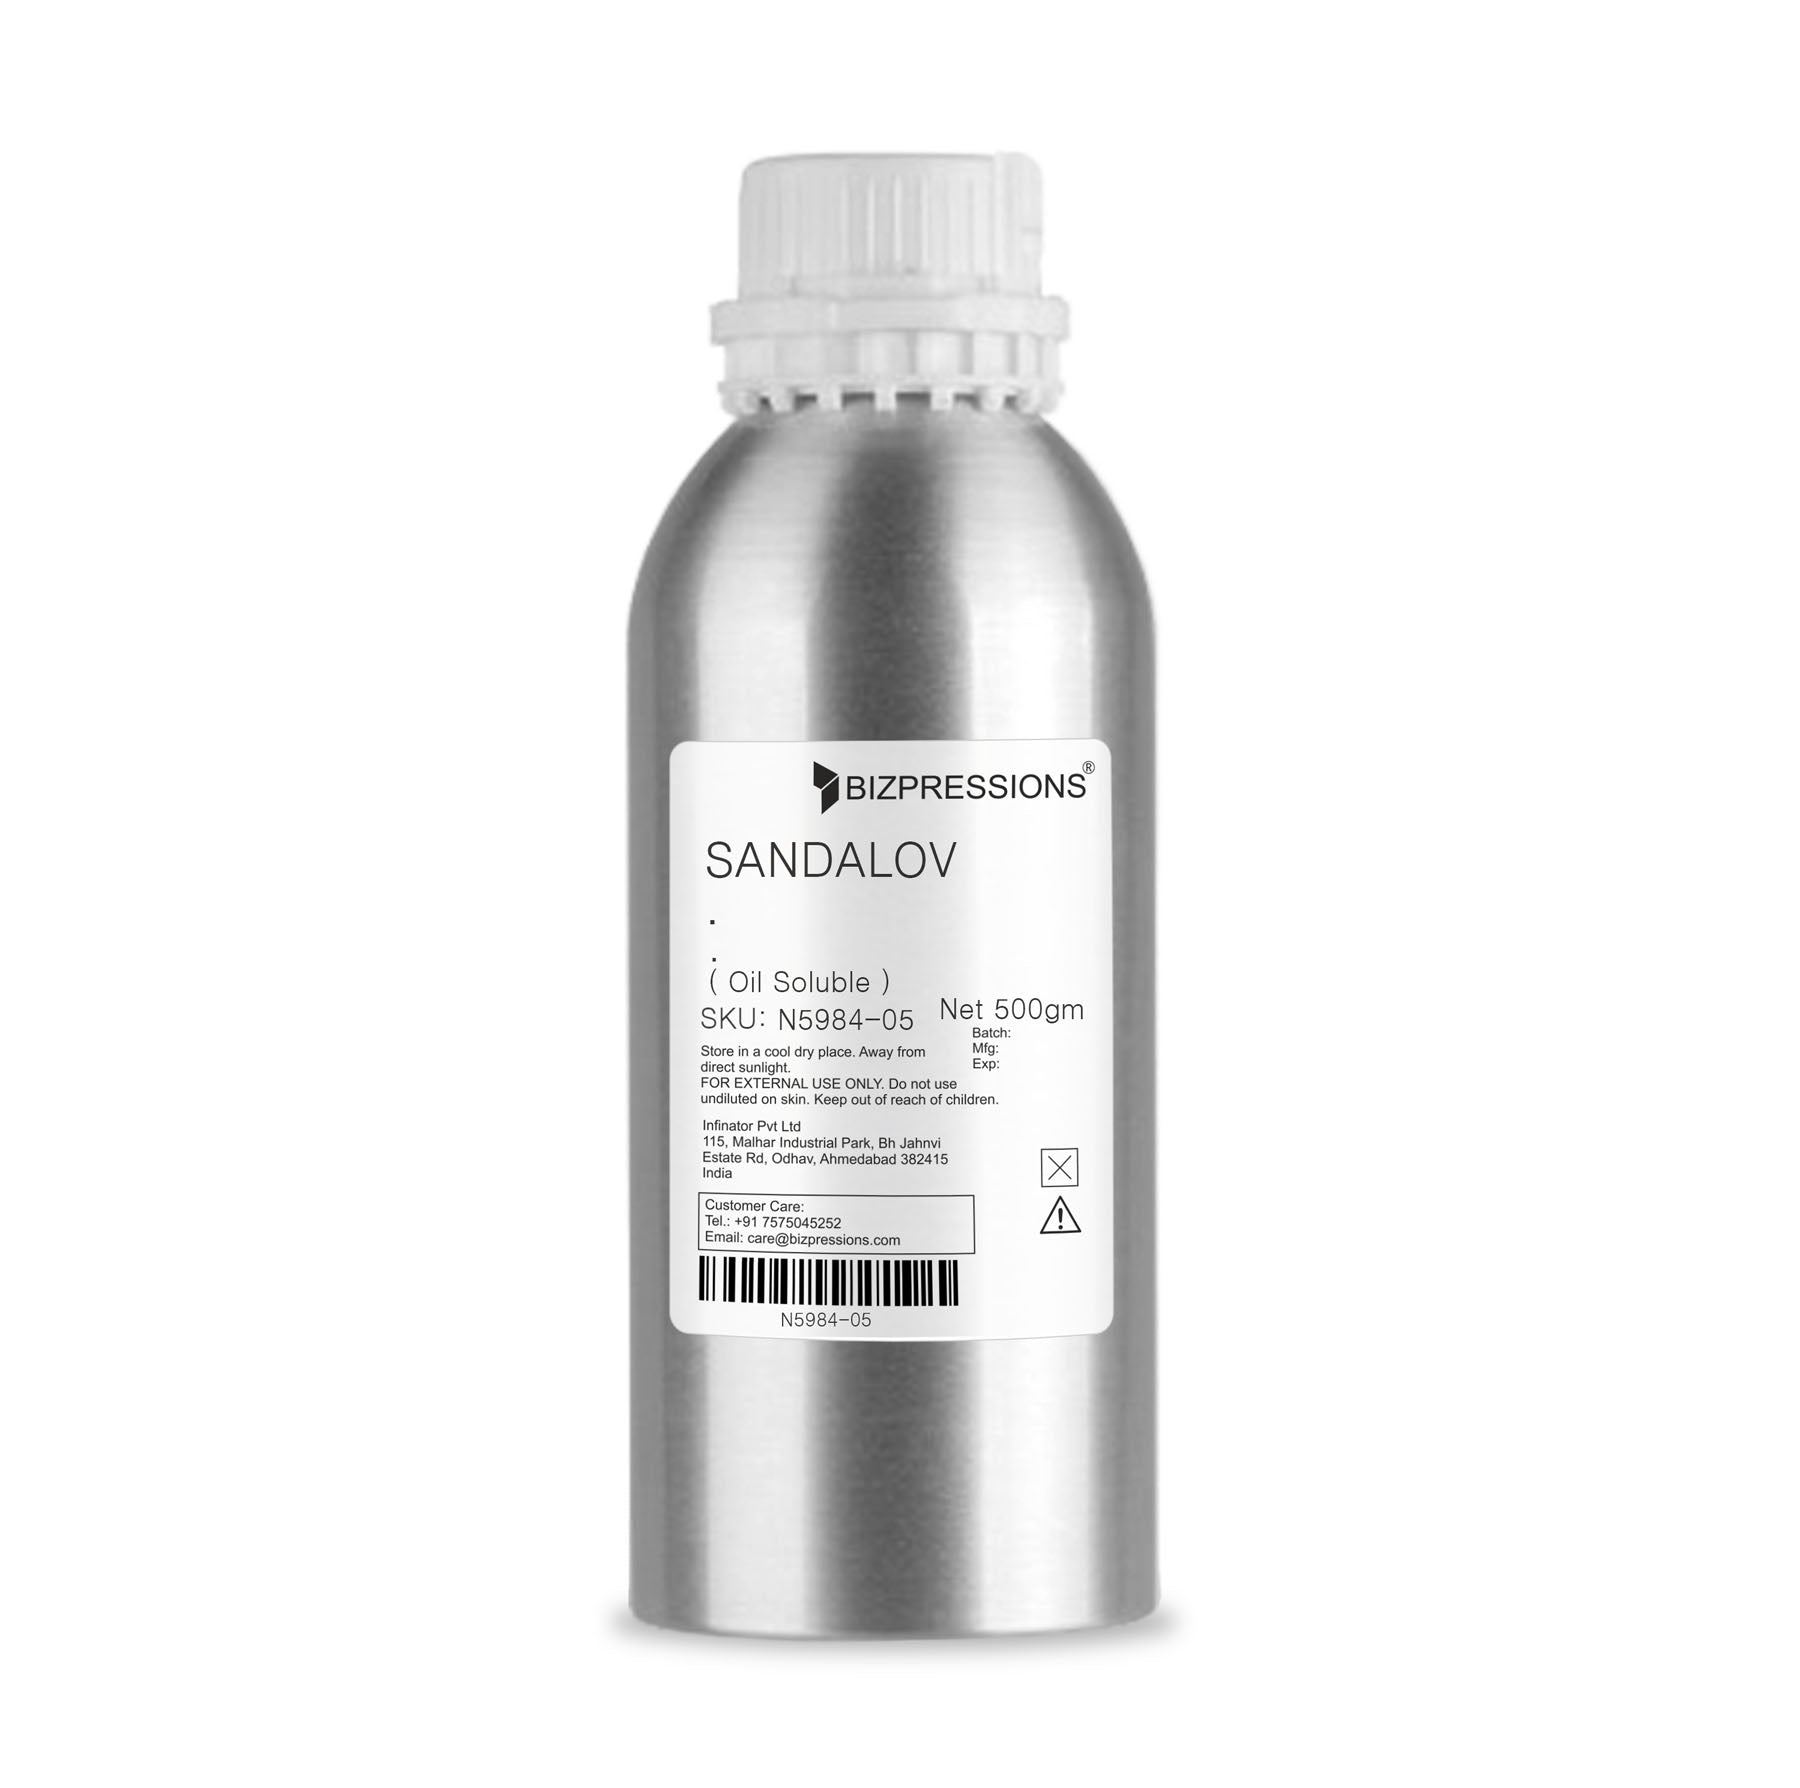 SANDALOV - Fragrance ( Oil Soluble ) - 500 gm